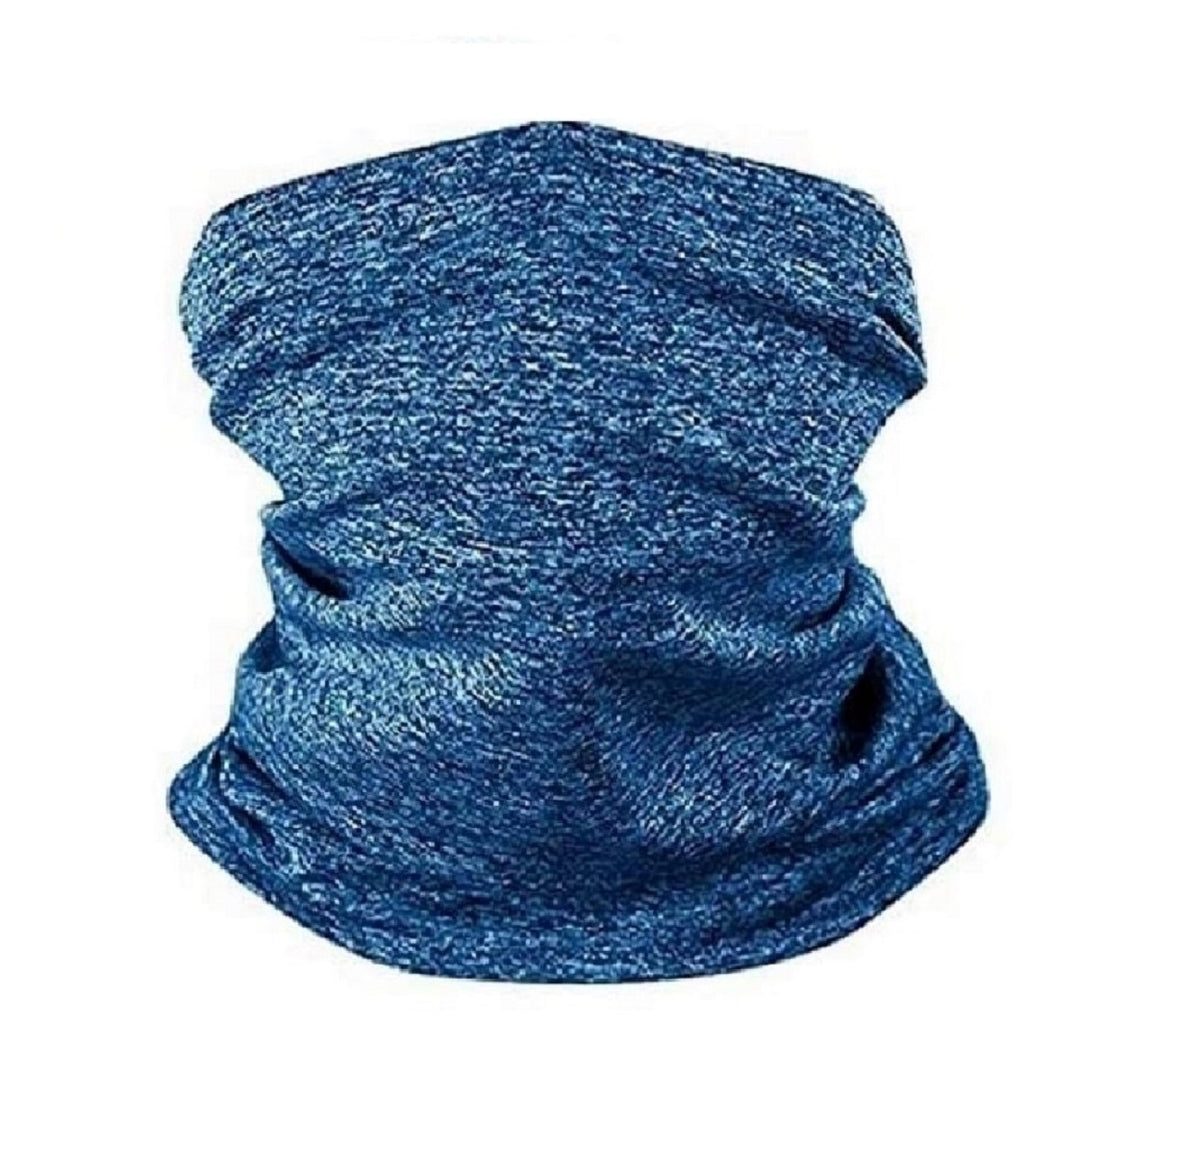 Magic Headwear Dice Cube Outdoor Scarf Headbands Bandana Mask Neck Gaiter Head Wrap Mask Sweatband